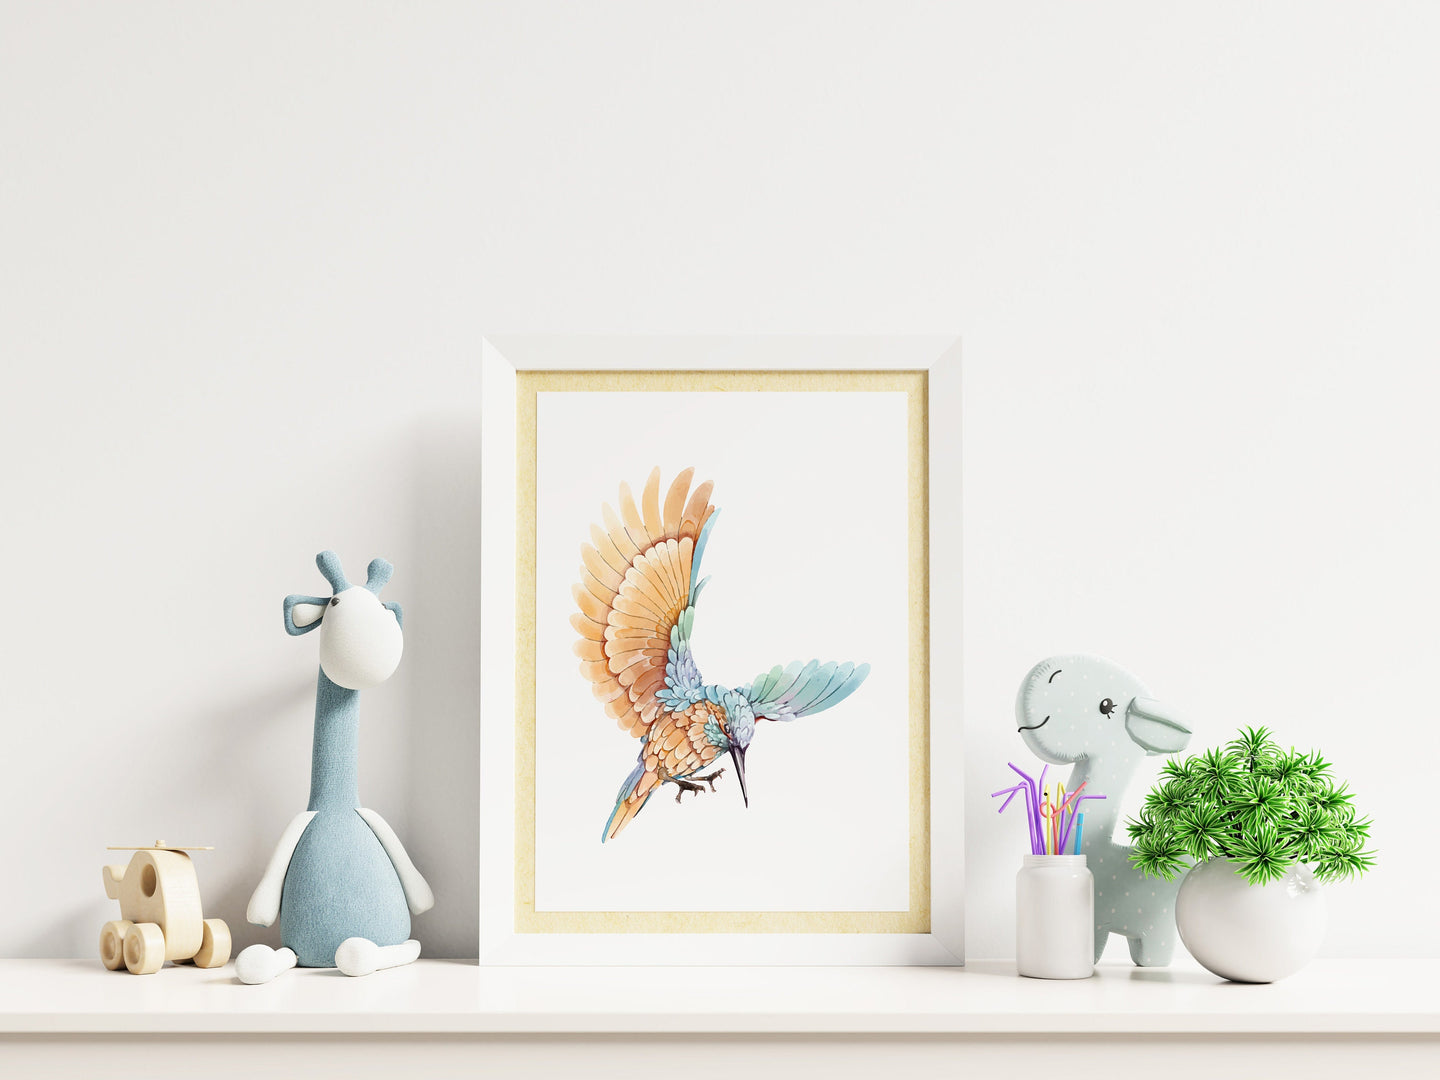 Watercolor Kingfisher print - King Fisher Bird wall art UNFRAMED